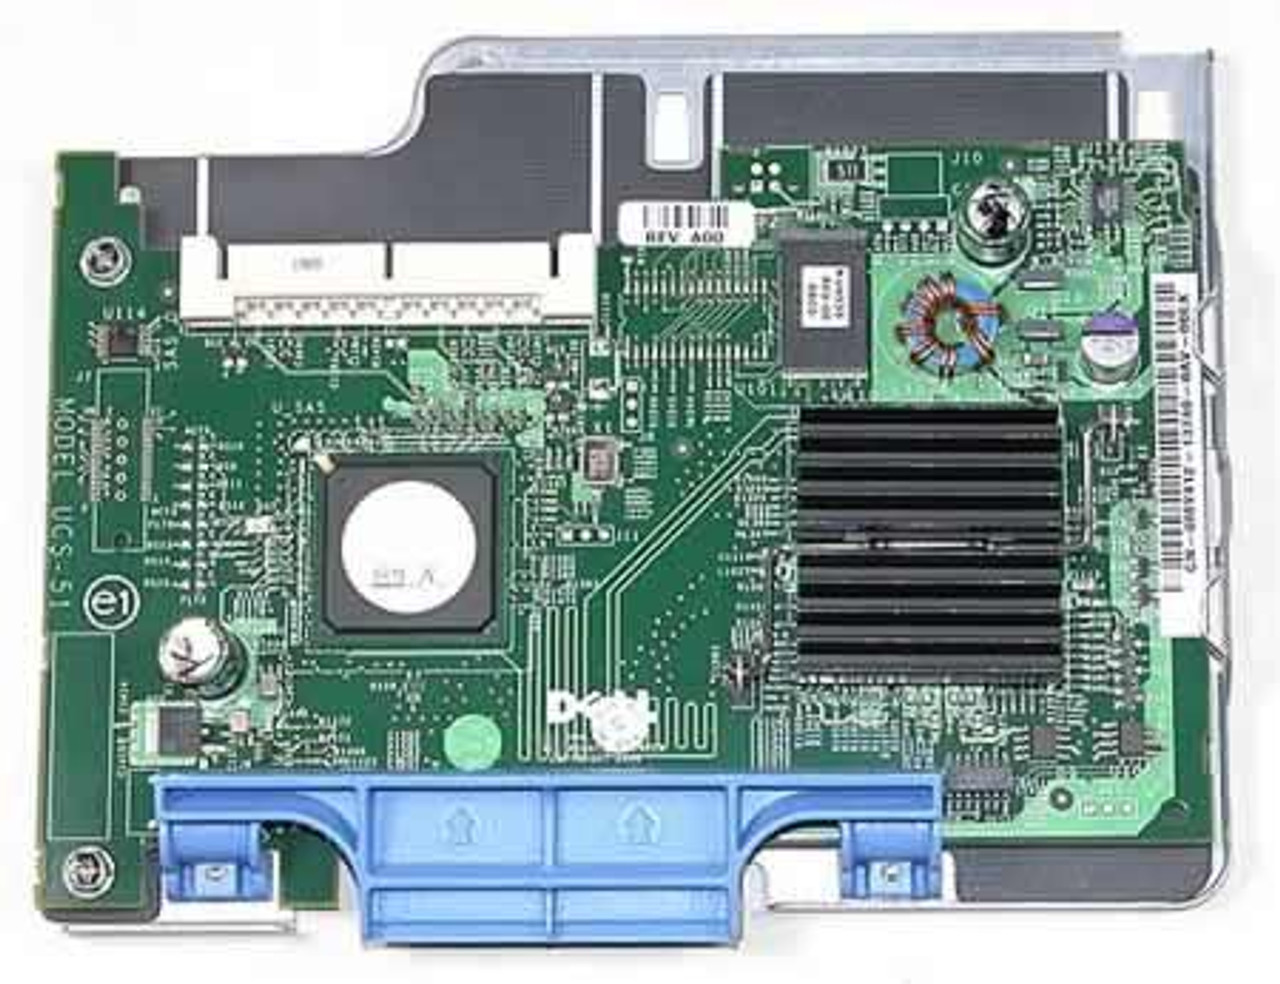 UCS-51 - Dell PERC 5/IR Single Channel PCI-Express SAS RAID Controller for PowerEdge / PowerVault Server